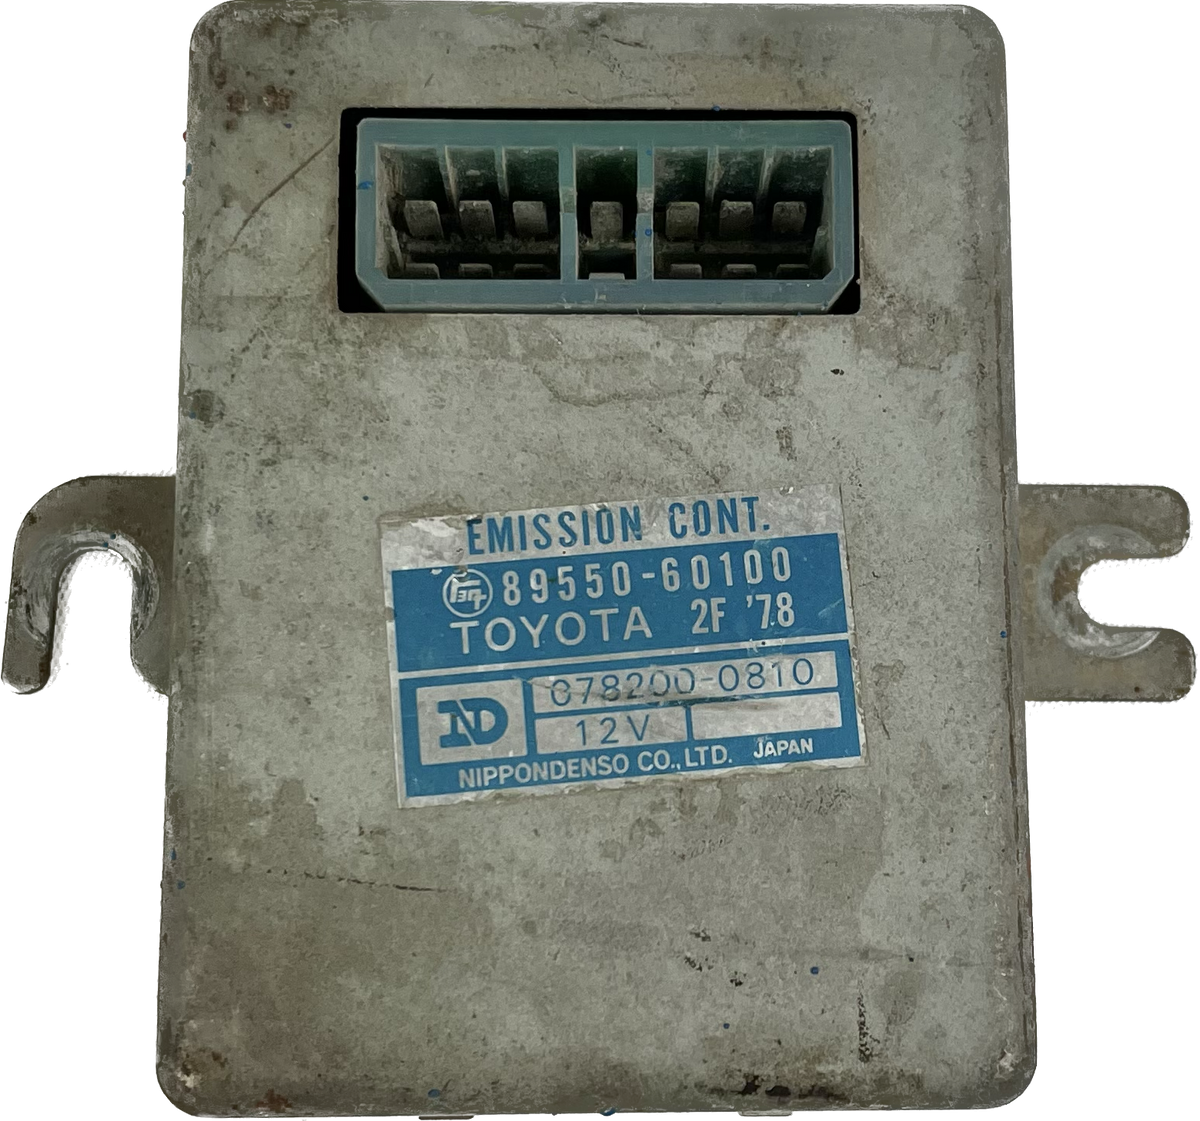 Used - Emission Control Unit (89550-60100) - FJ40 / FJ55 1977-1978